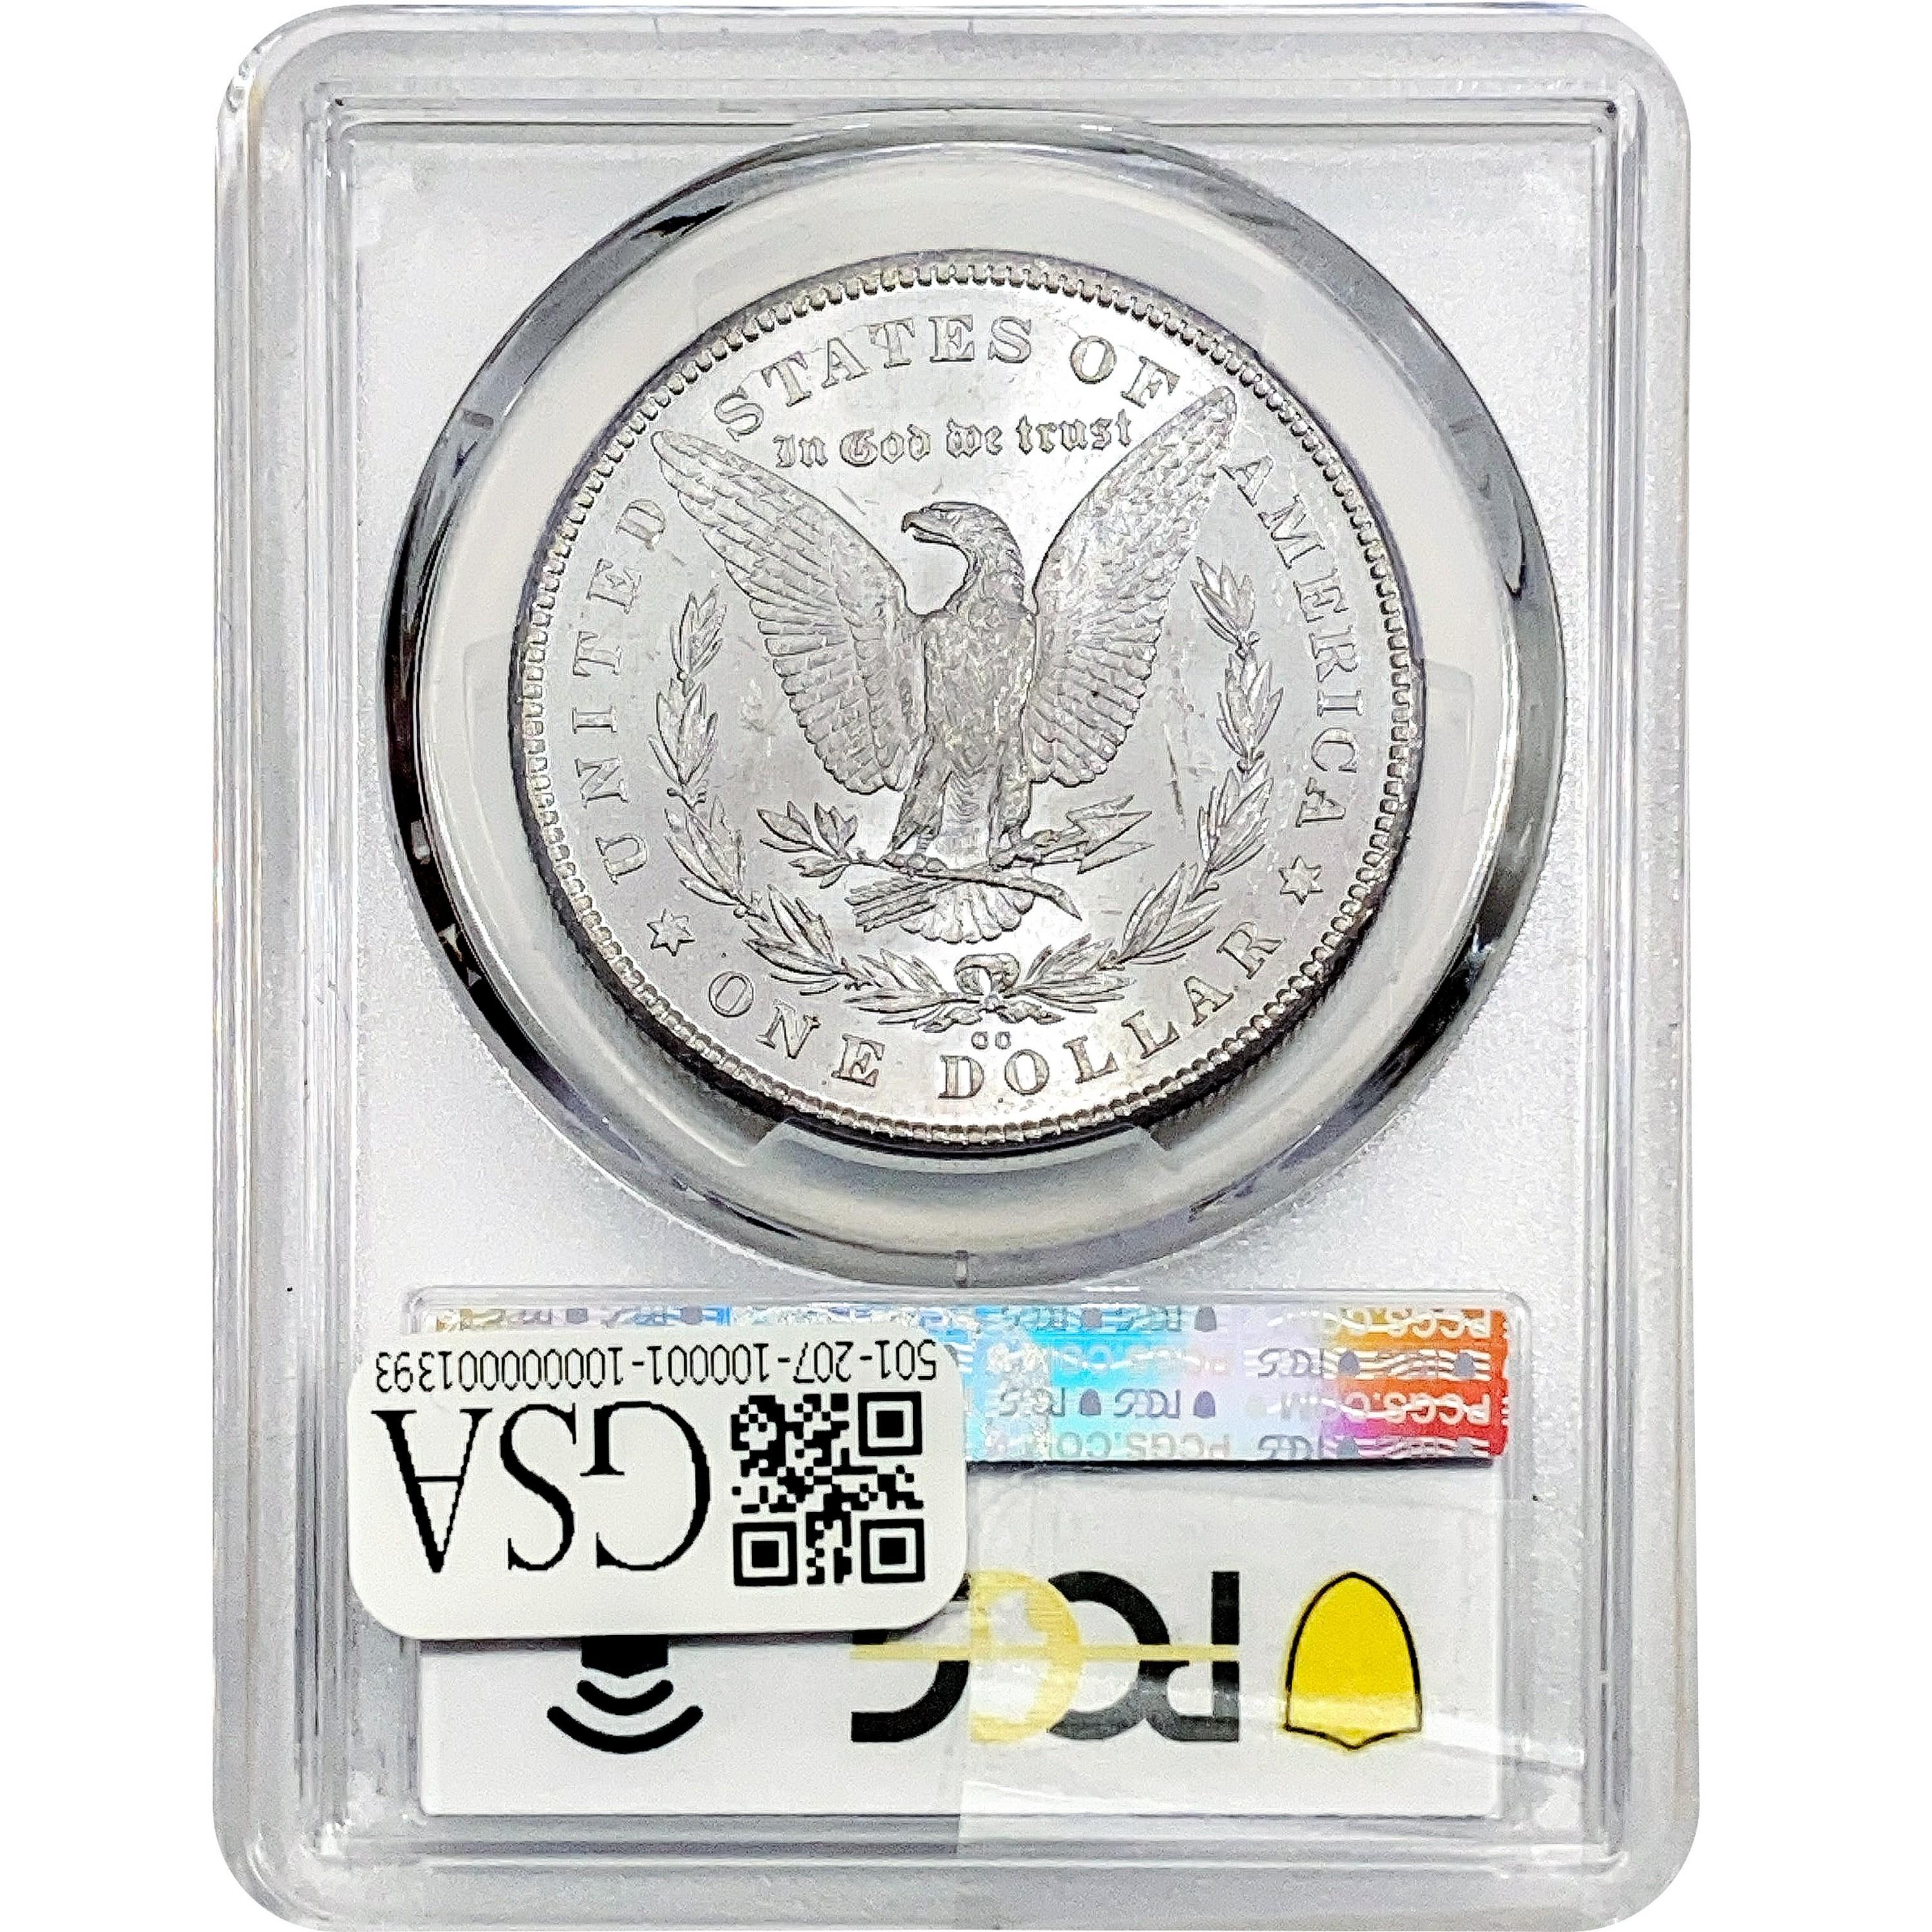 1878-CC Morgan Silver Dollar PCGS MS63